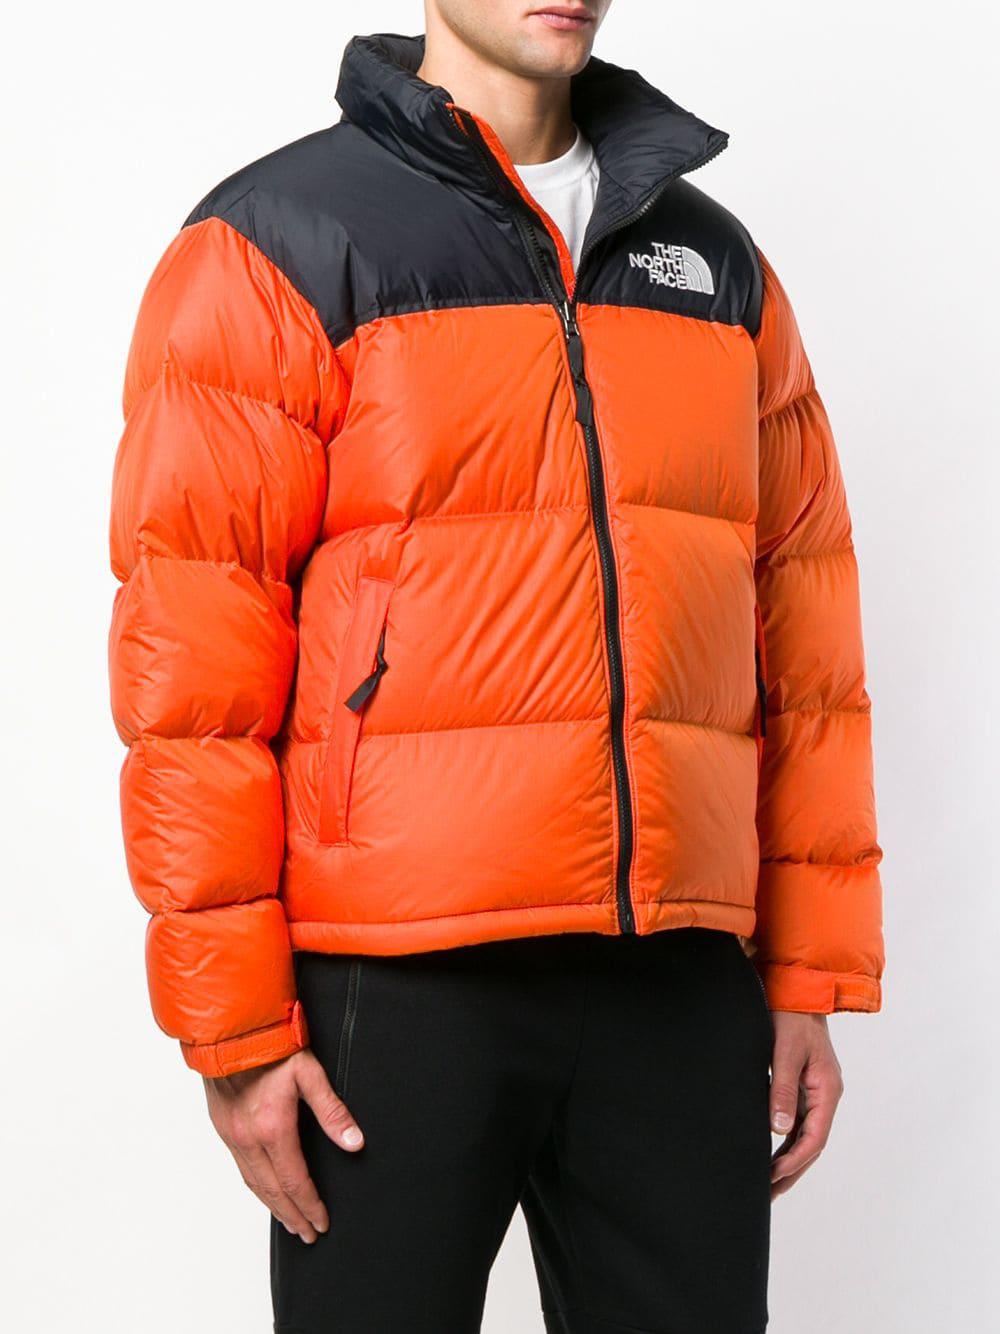 The North Face Synthetic M 1996 Rto Nptse Jacket in Orange/Black ...